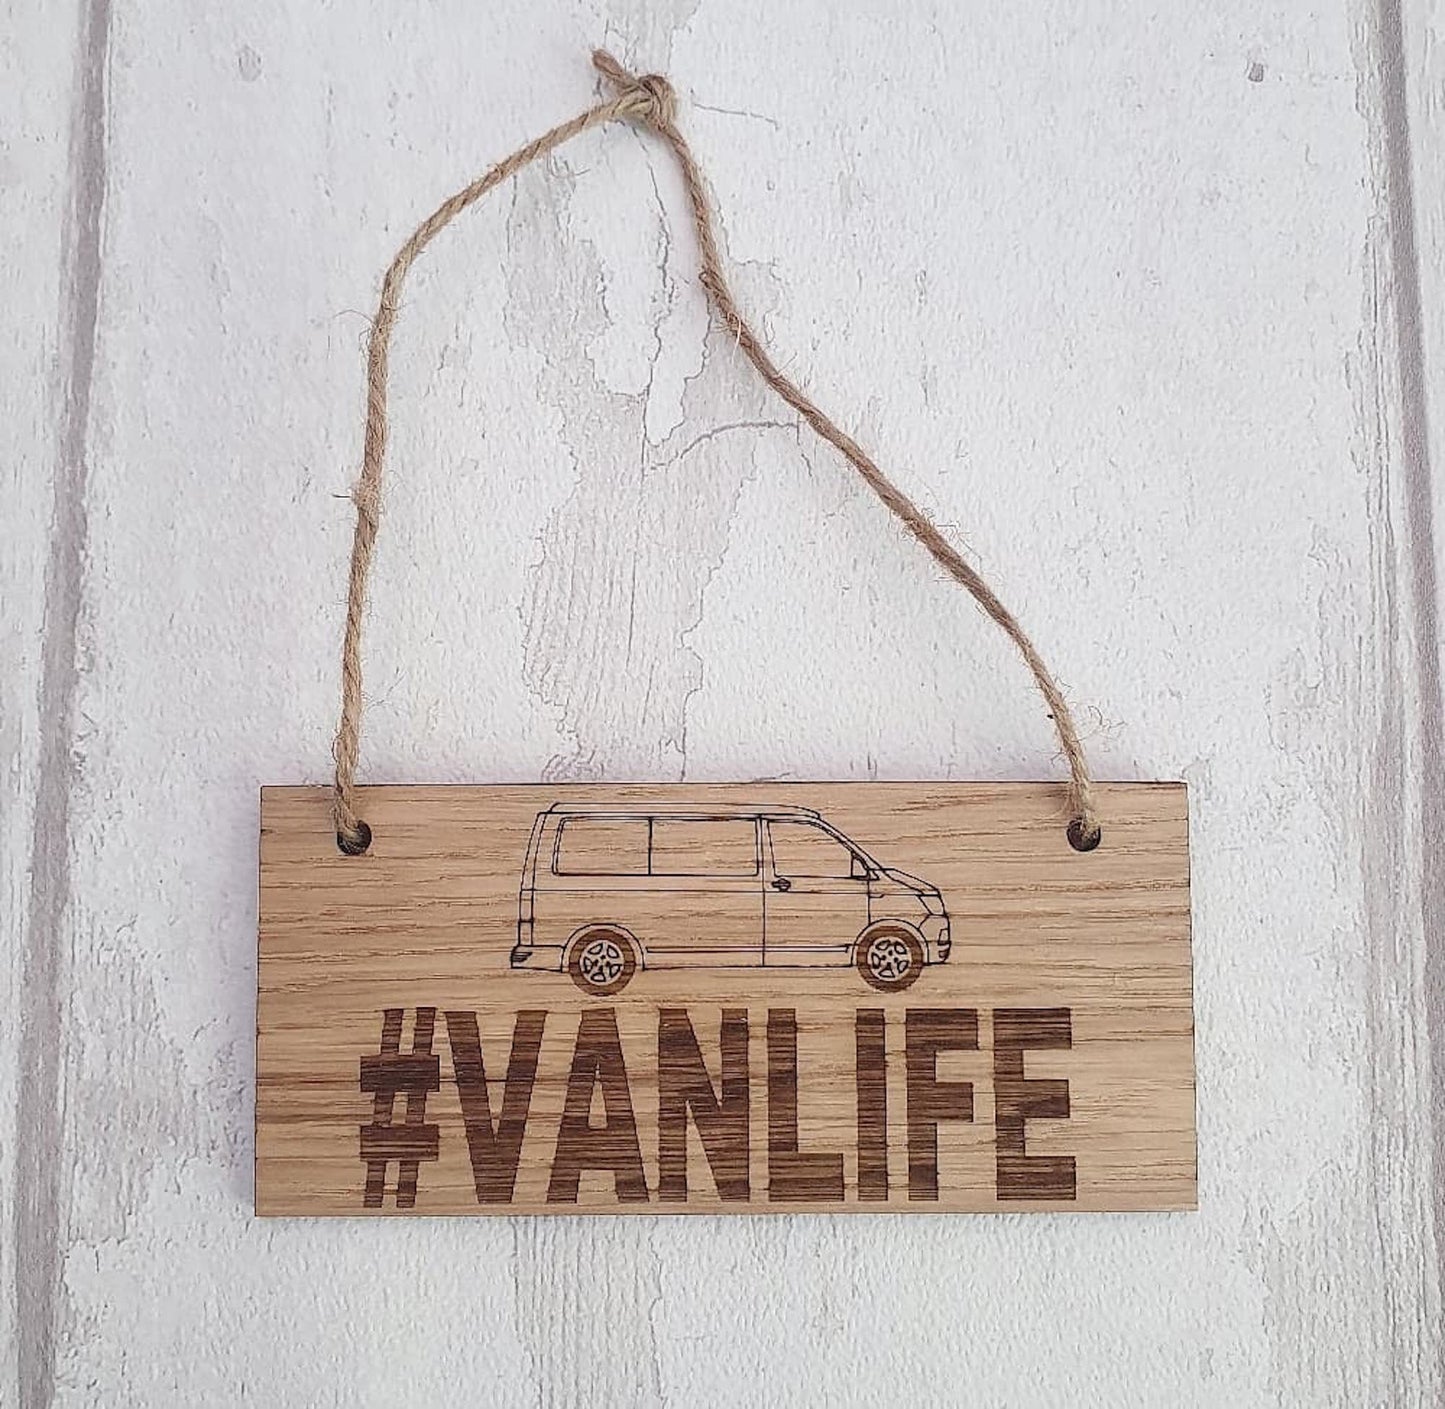 Oak veneer sign for camper van, Van Life. - LaserGiftsuk